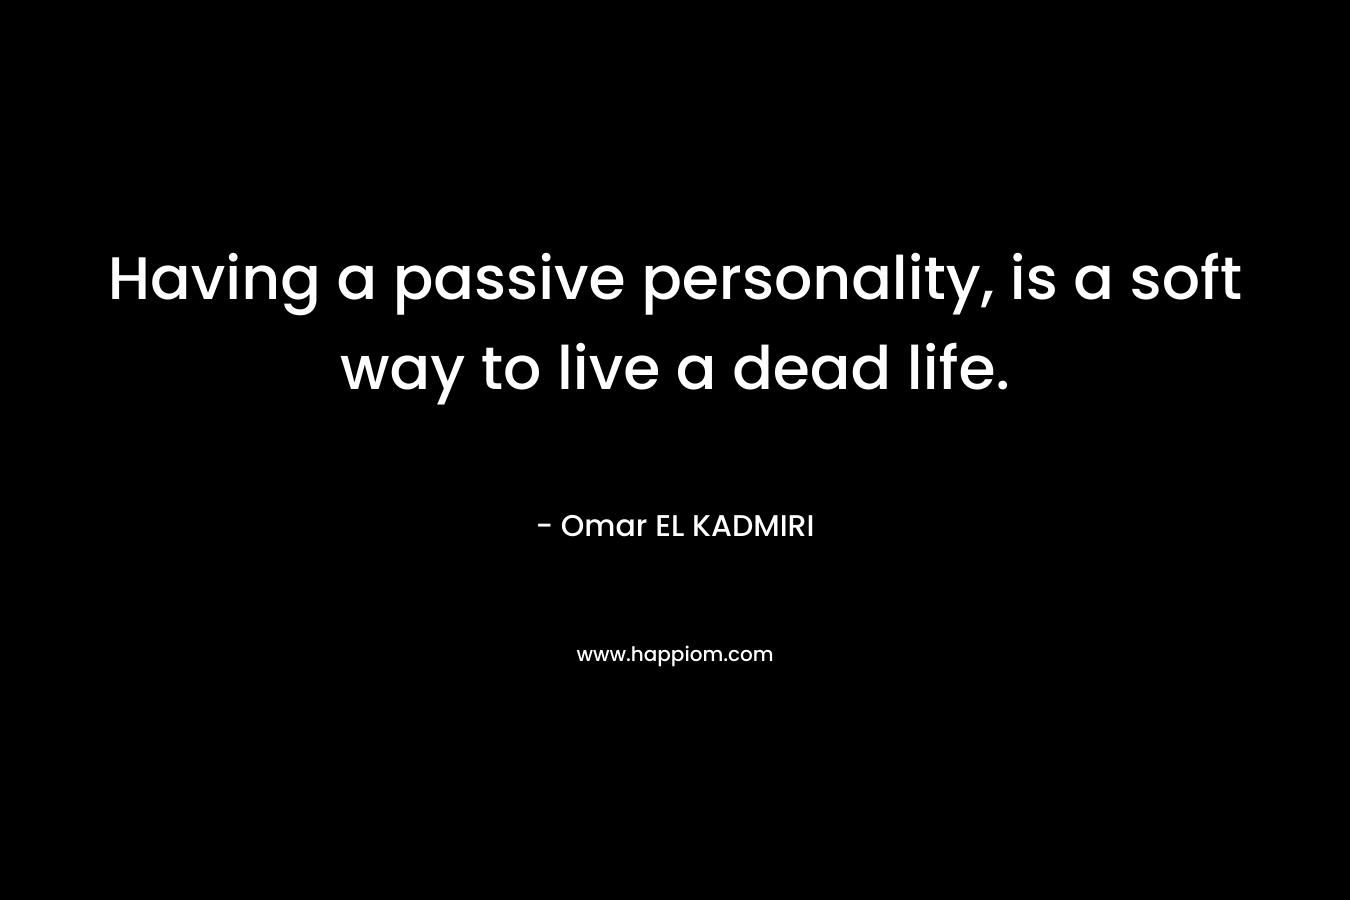 Having a passive personality, is a soft way to live a dead life. – Omar EL KADMIRI